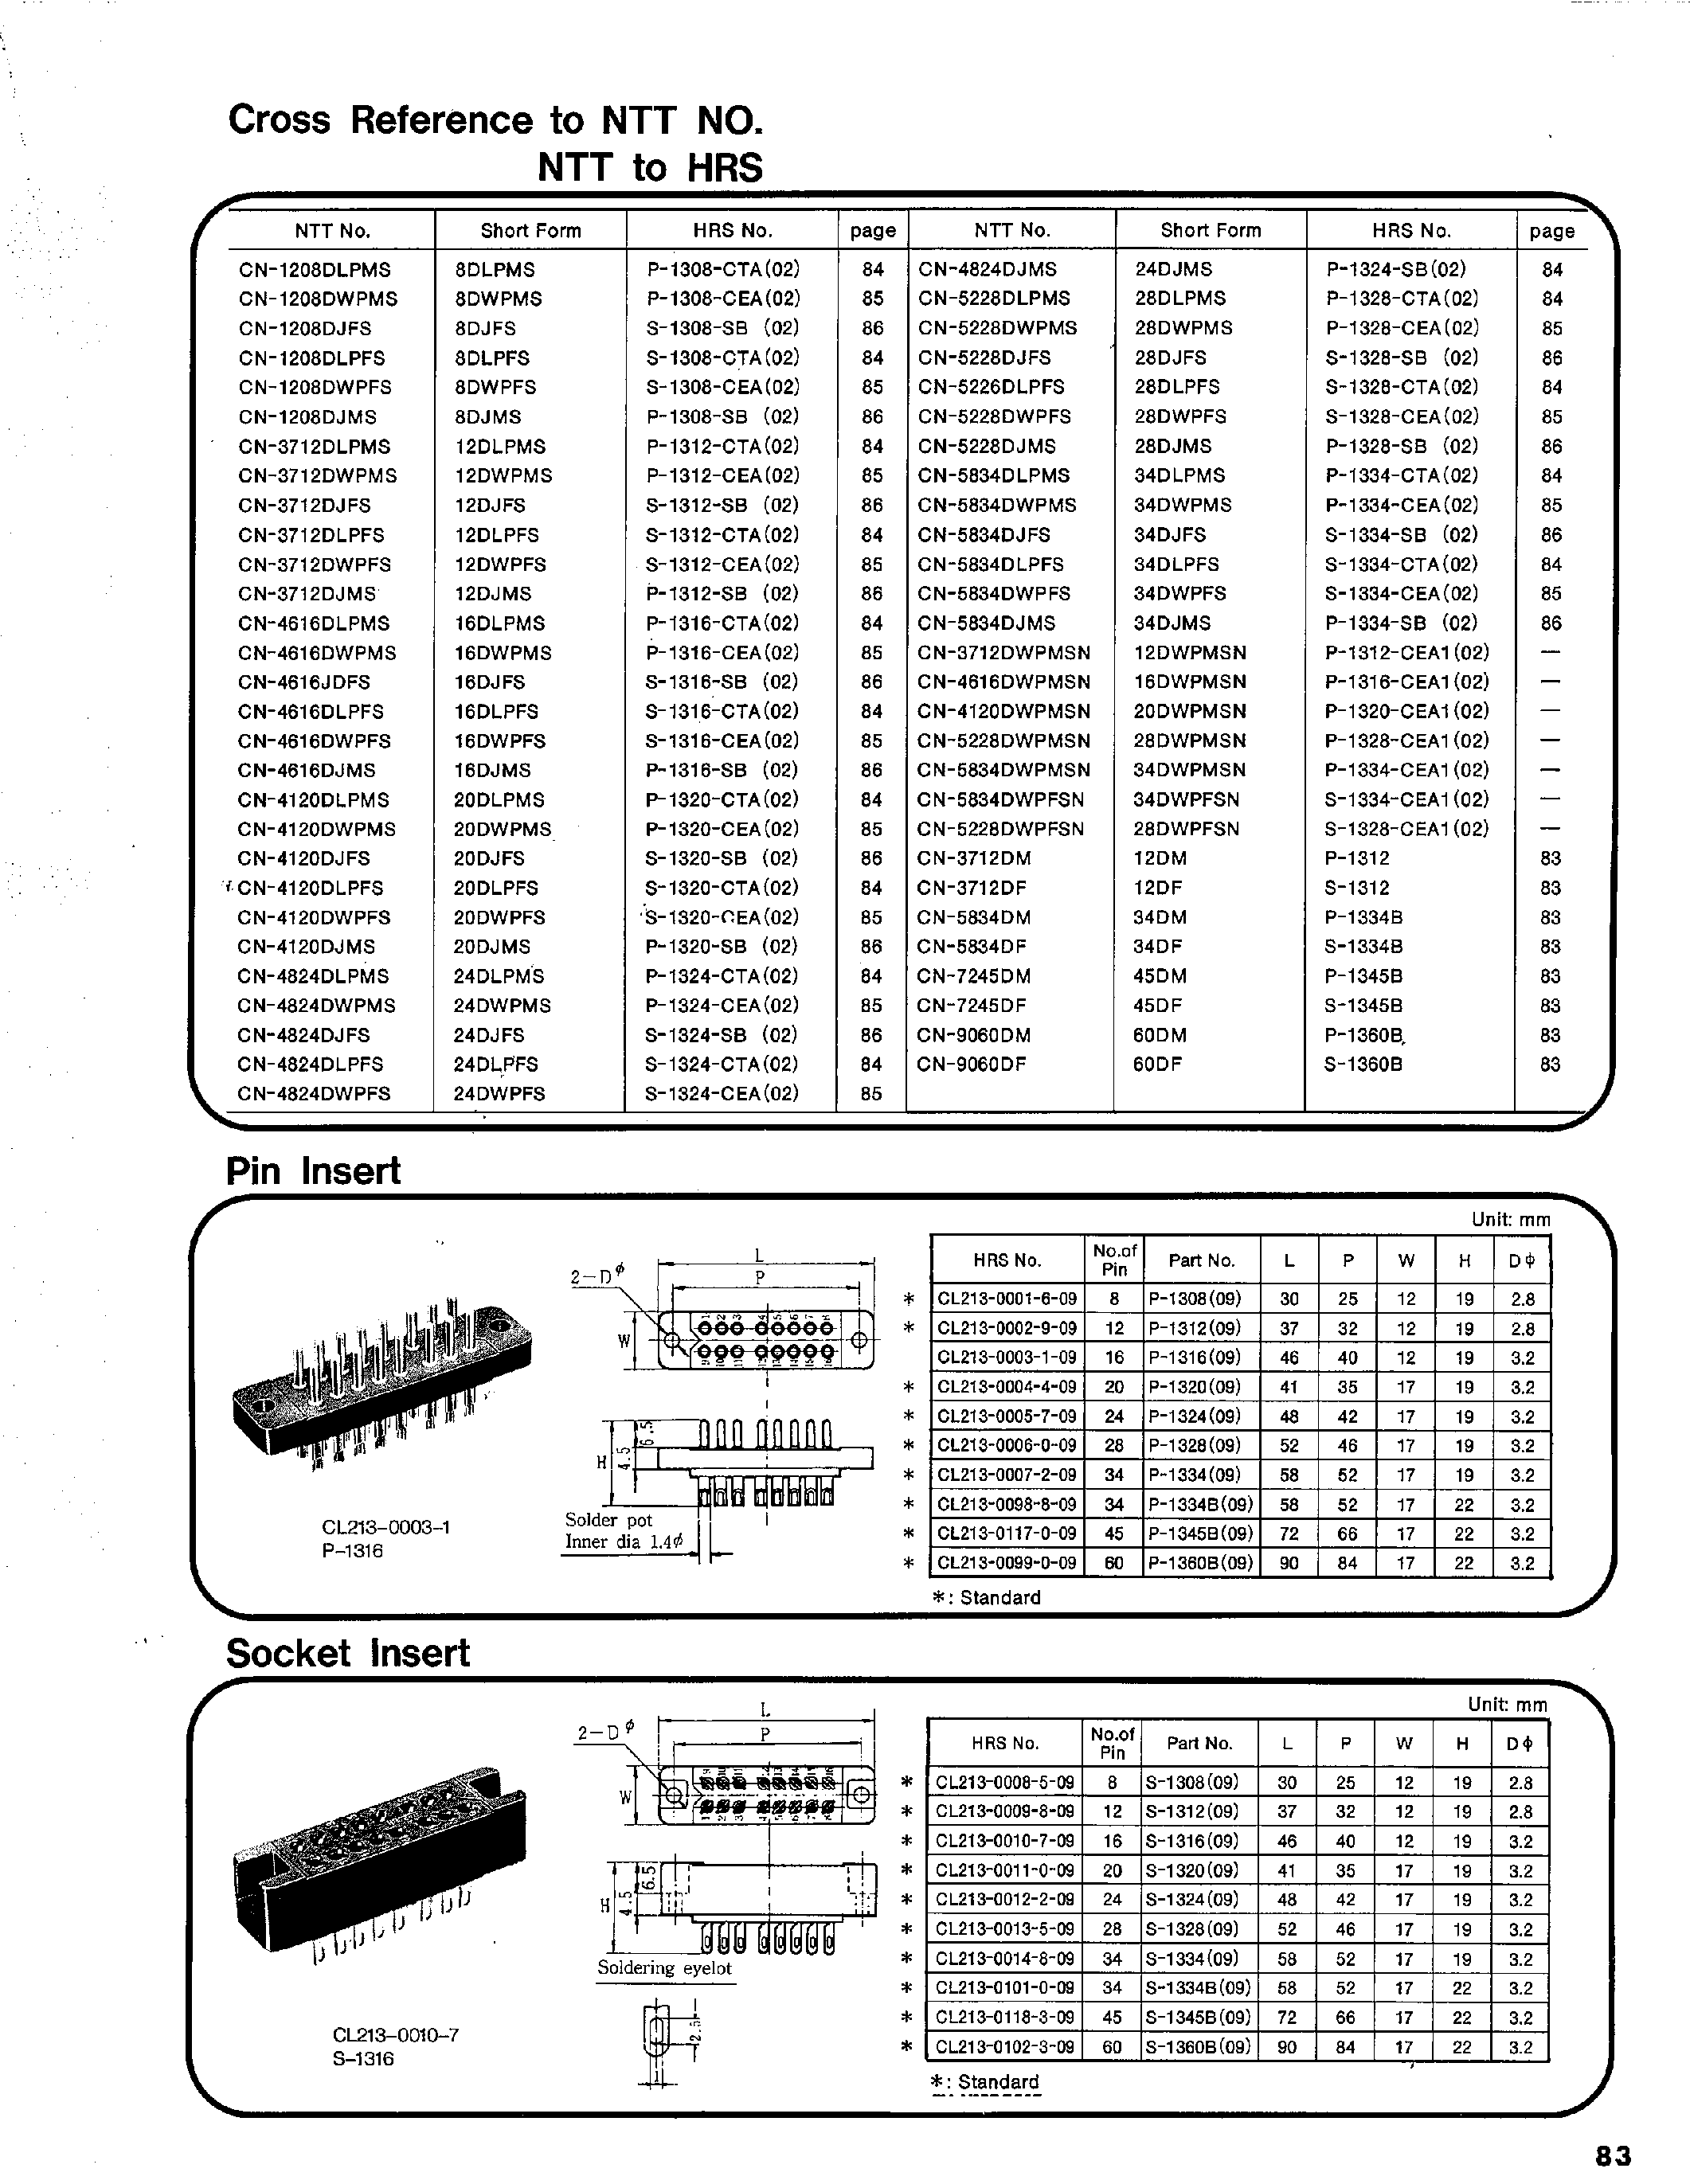 Datasheet P-1345-CE - 1300 SERIES RECTANGULAR CONNECTORS page 2